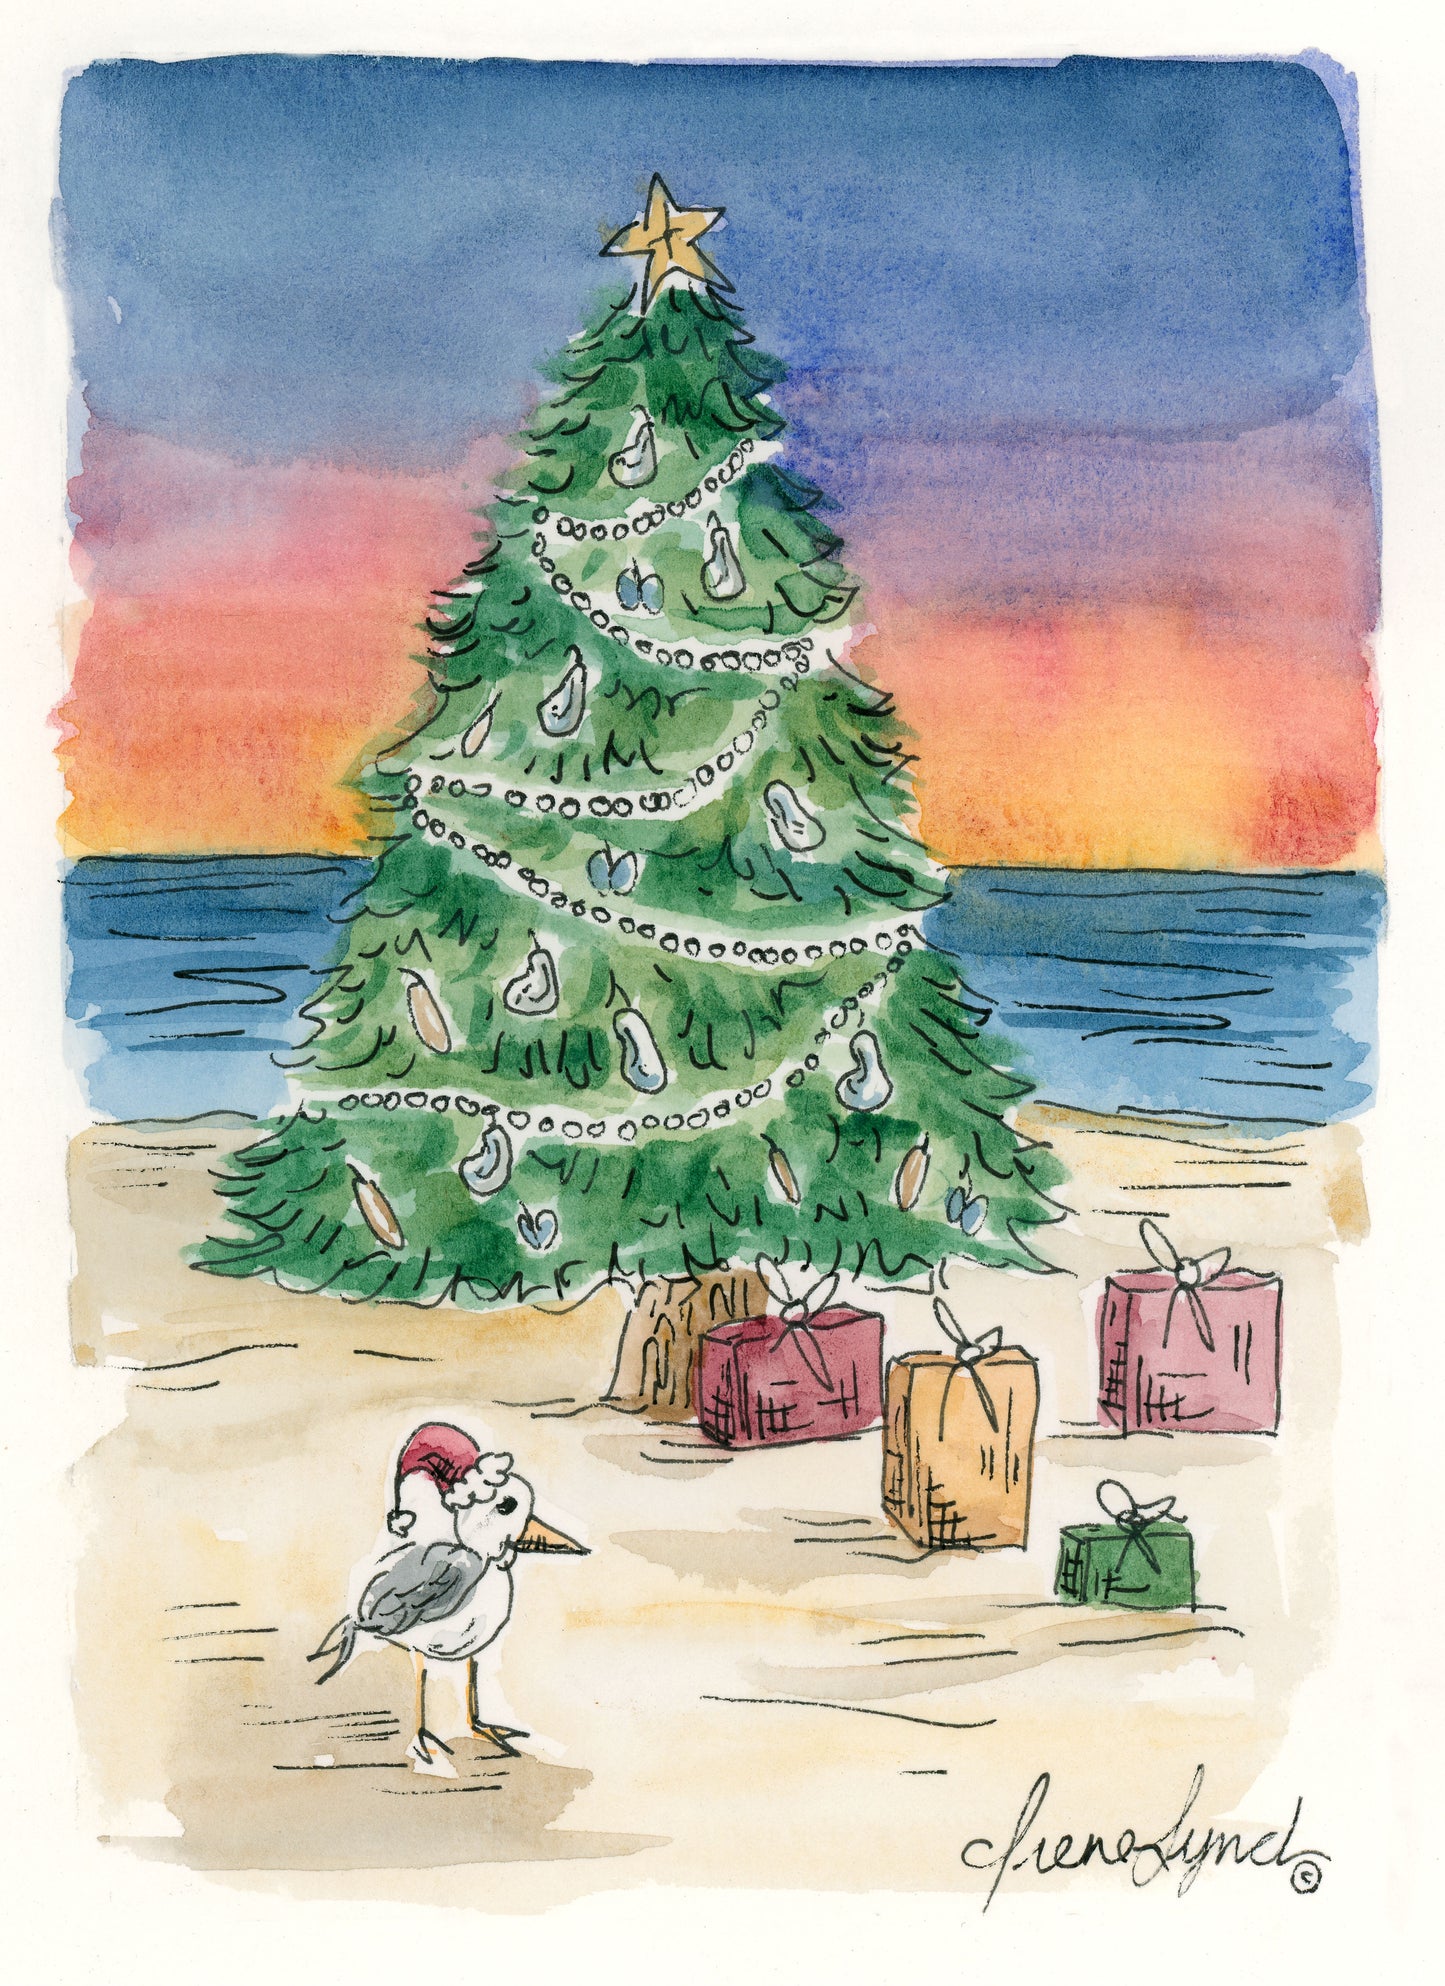 "Holidays on Cape Cod" Holiday Card Box Set